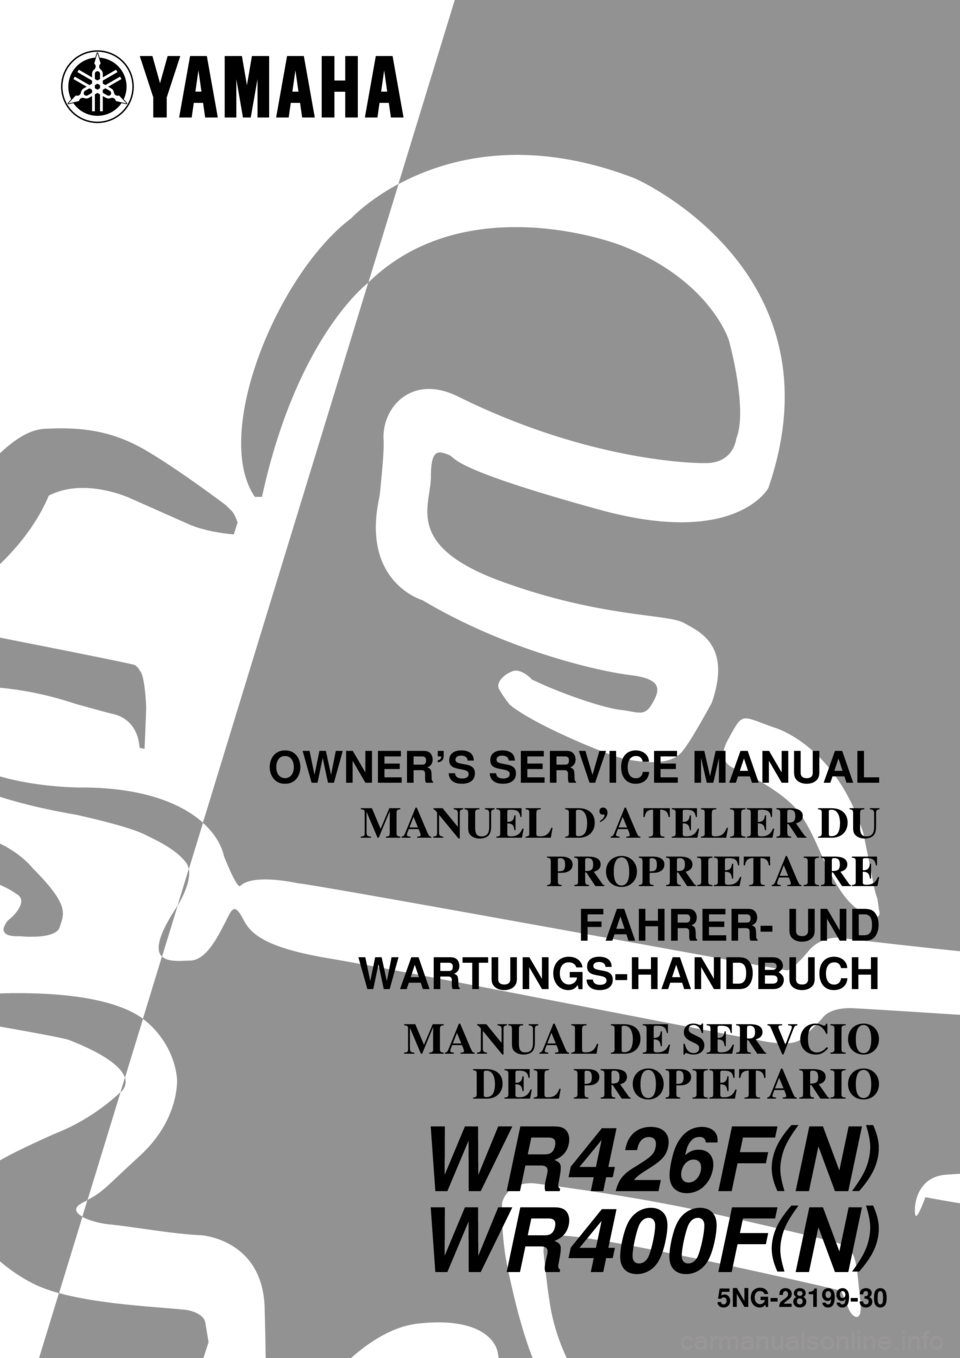 YAMAHA WR 426F 2001  Manuale duso (in Italian)      
 
 
 
5NG-28199-30
WR426F(N)
WR400F(N)
OWNER’S SERVICE MANUAL
MANUEL D’ATELIER DU
PROPRIETAIRE
FAHRER- UND
WARTUNGS-HANDBUCH
MANUAL DE SERVCIO
DEL PROPIETARIO 